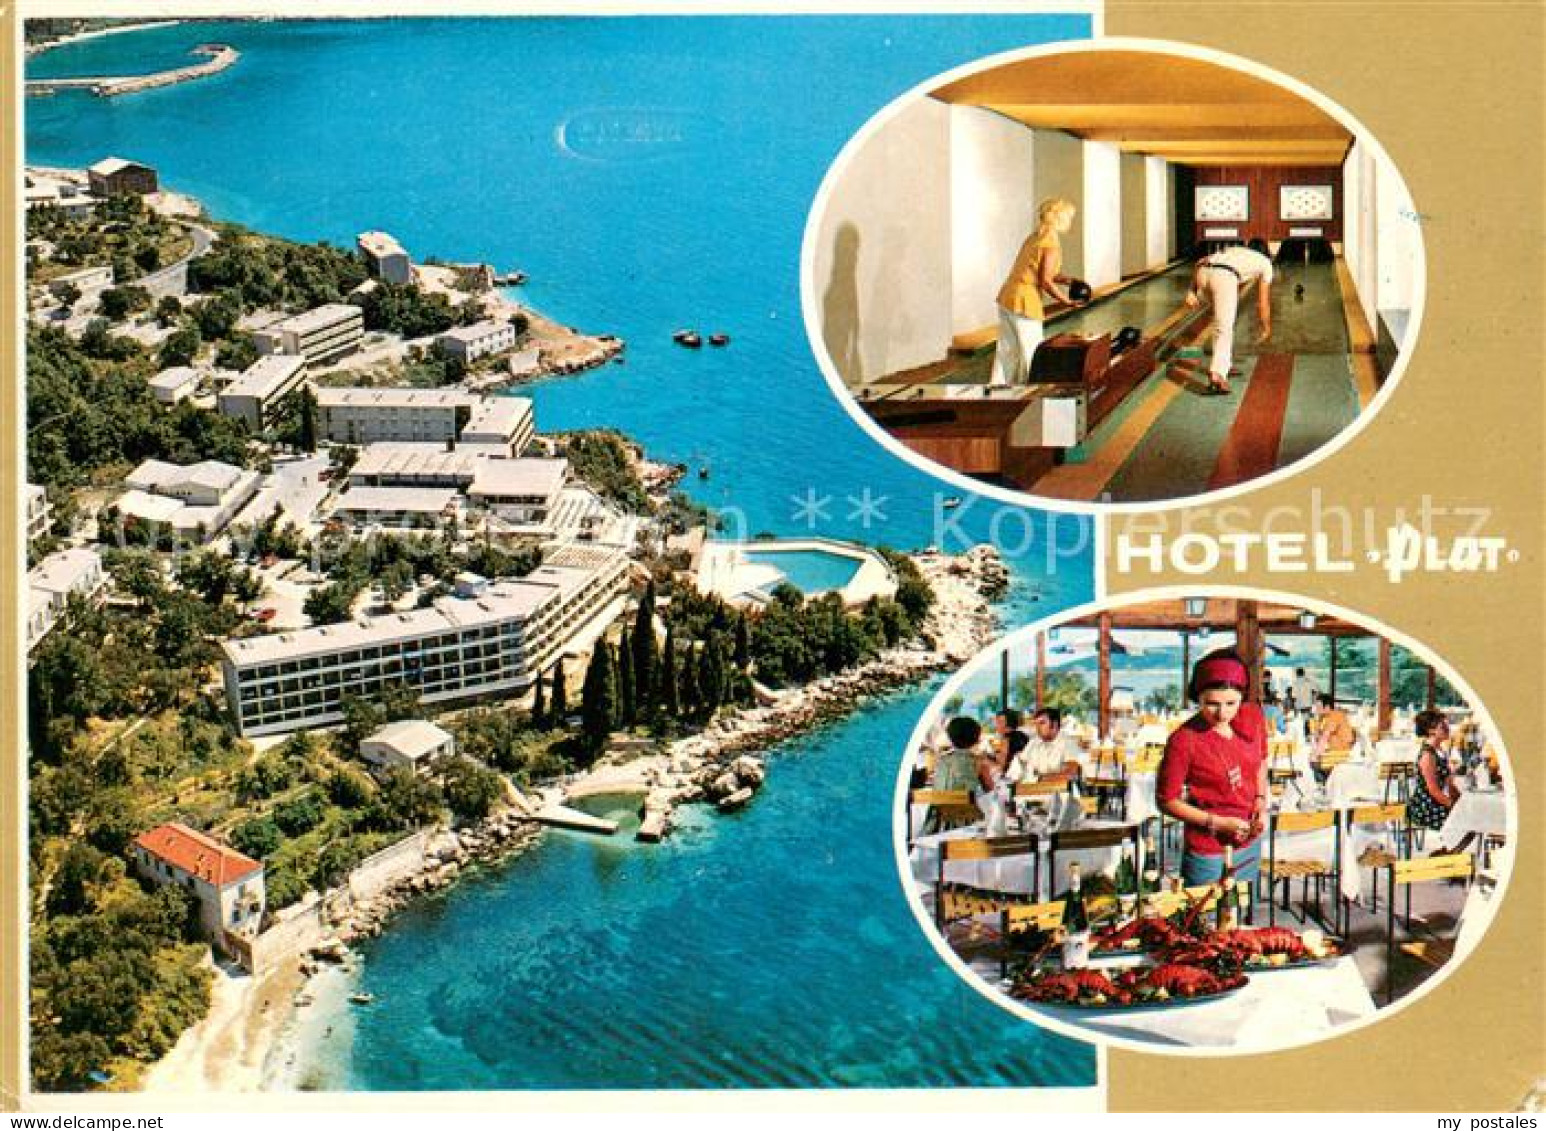 73648869 Dubrovnik Ragusa Hotel Plat Restaurant Kegelbahn Strand Kueste Fliegera - Croacia